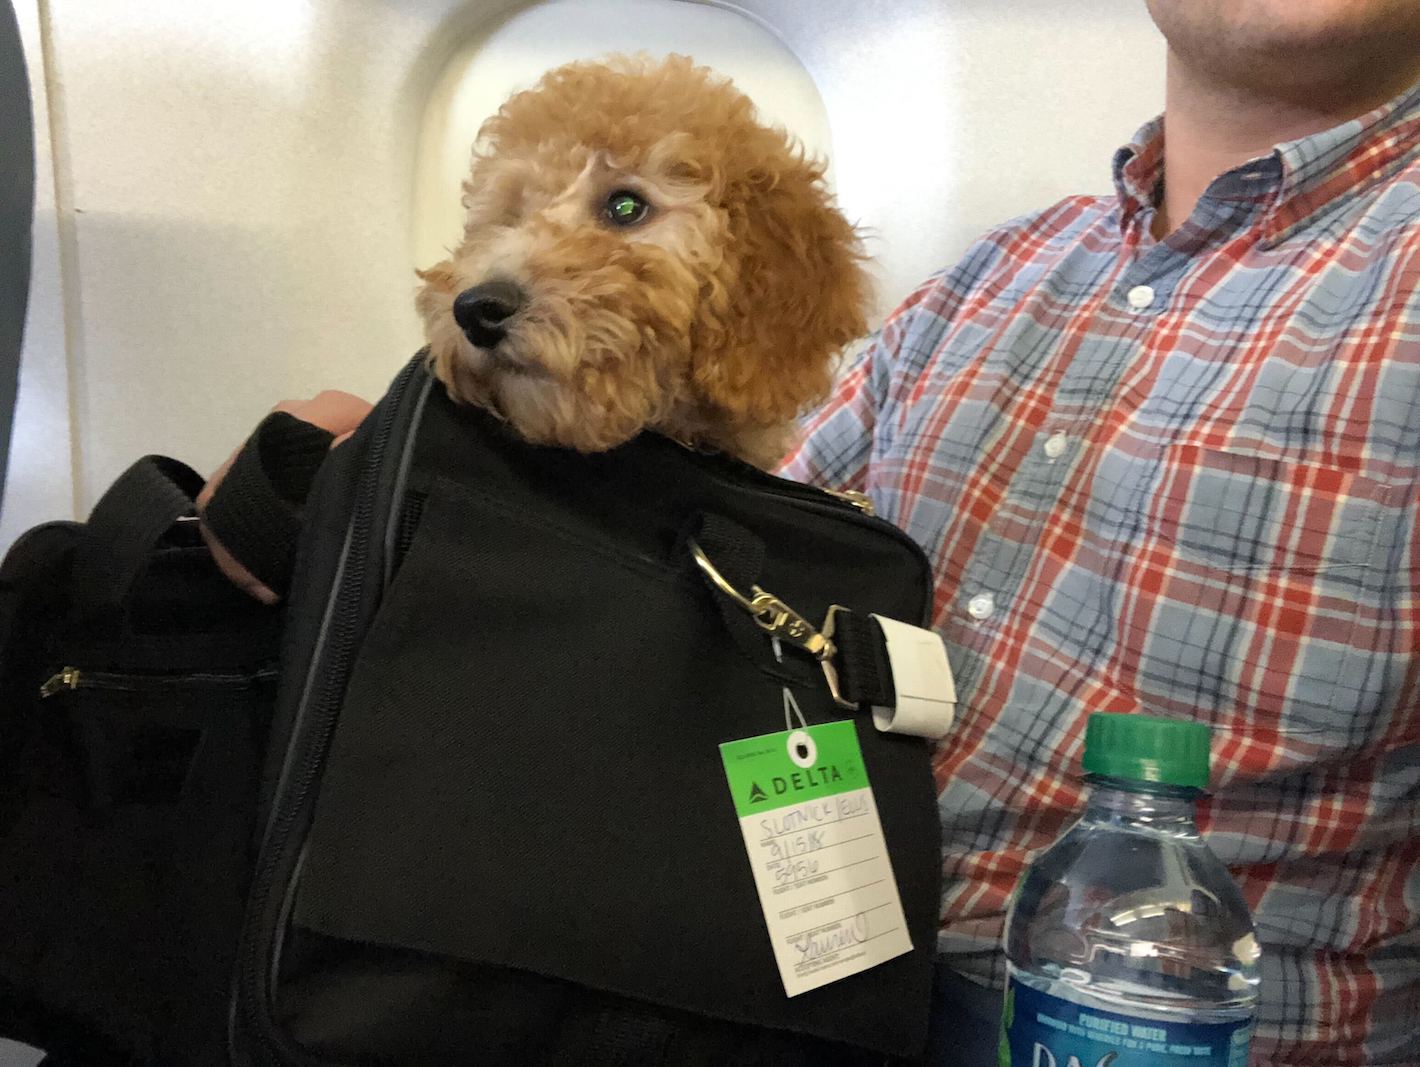 dog airplane travel